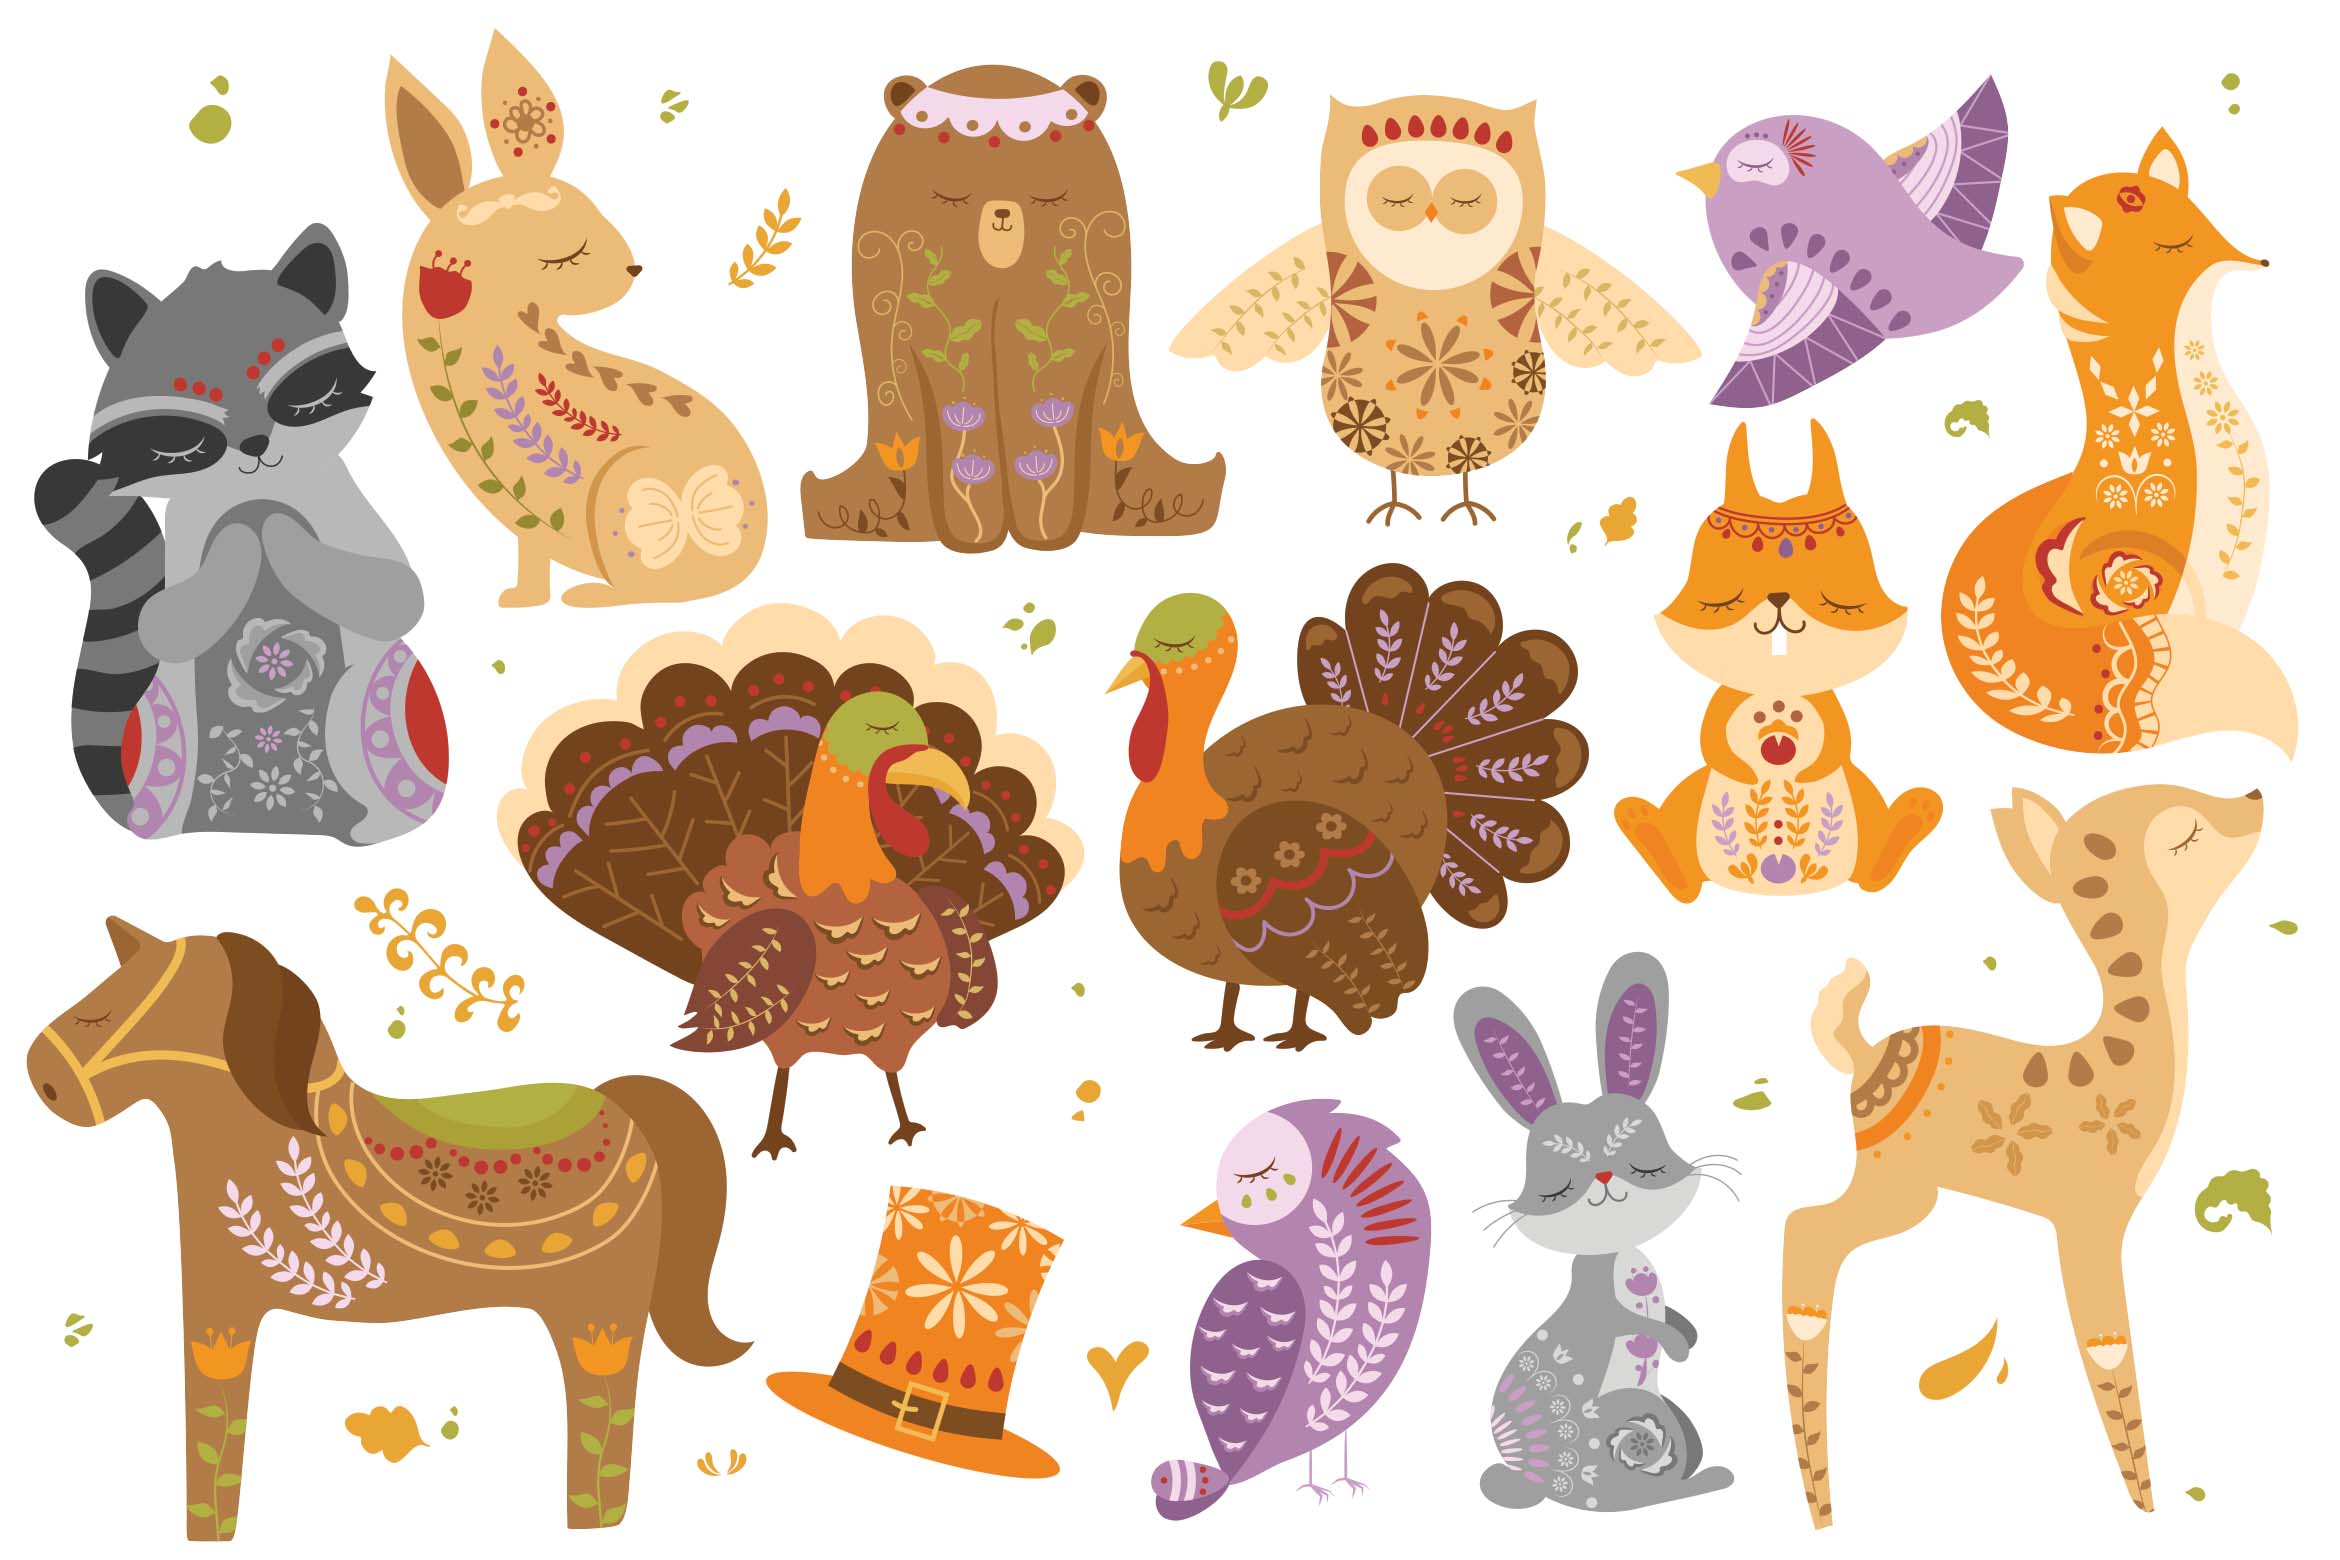 Thanksgiving Woodland Creature Animal Character Illustrations